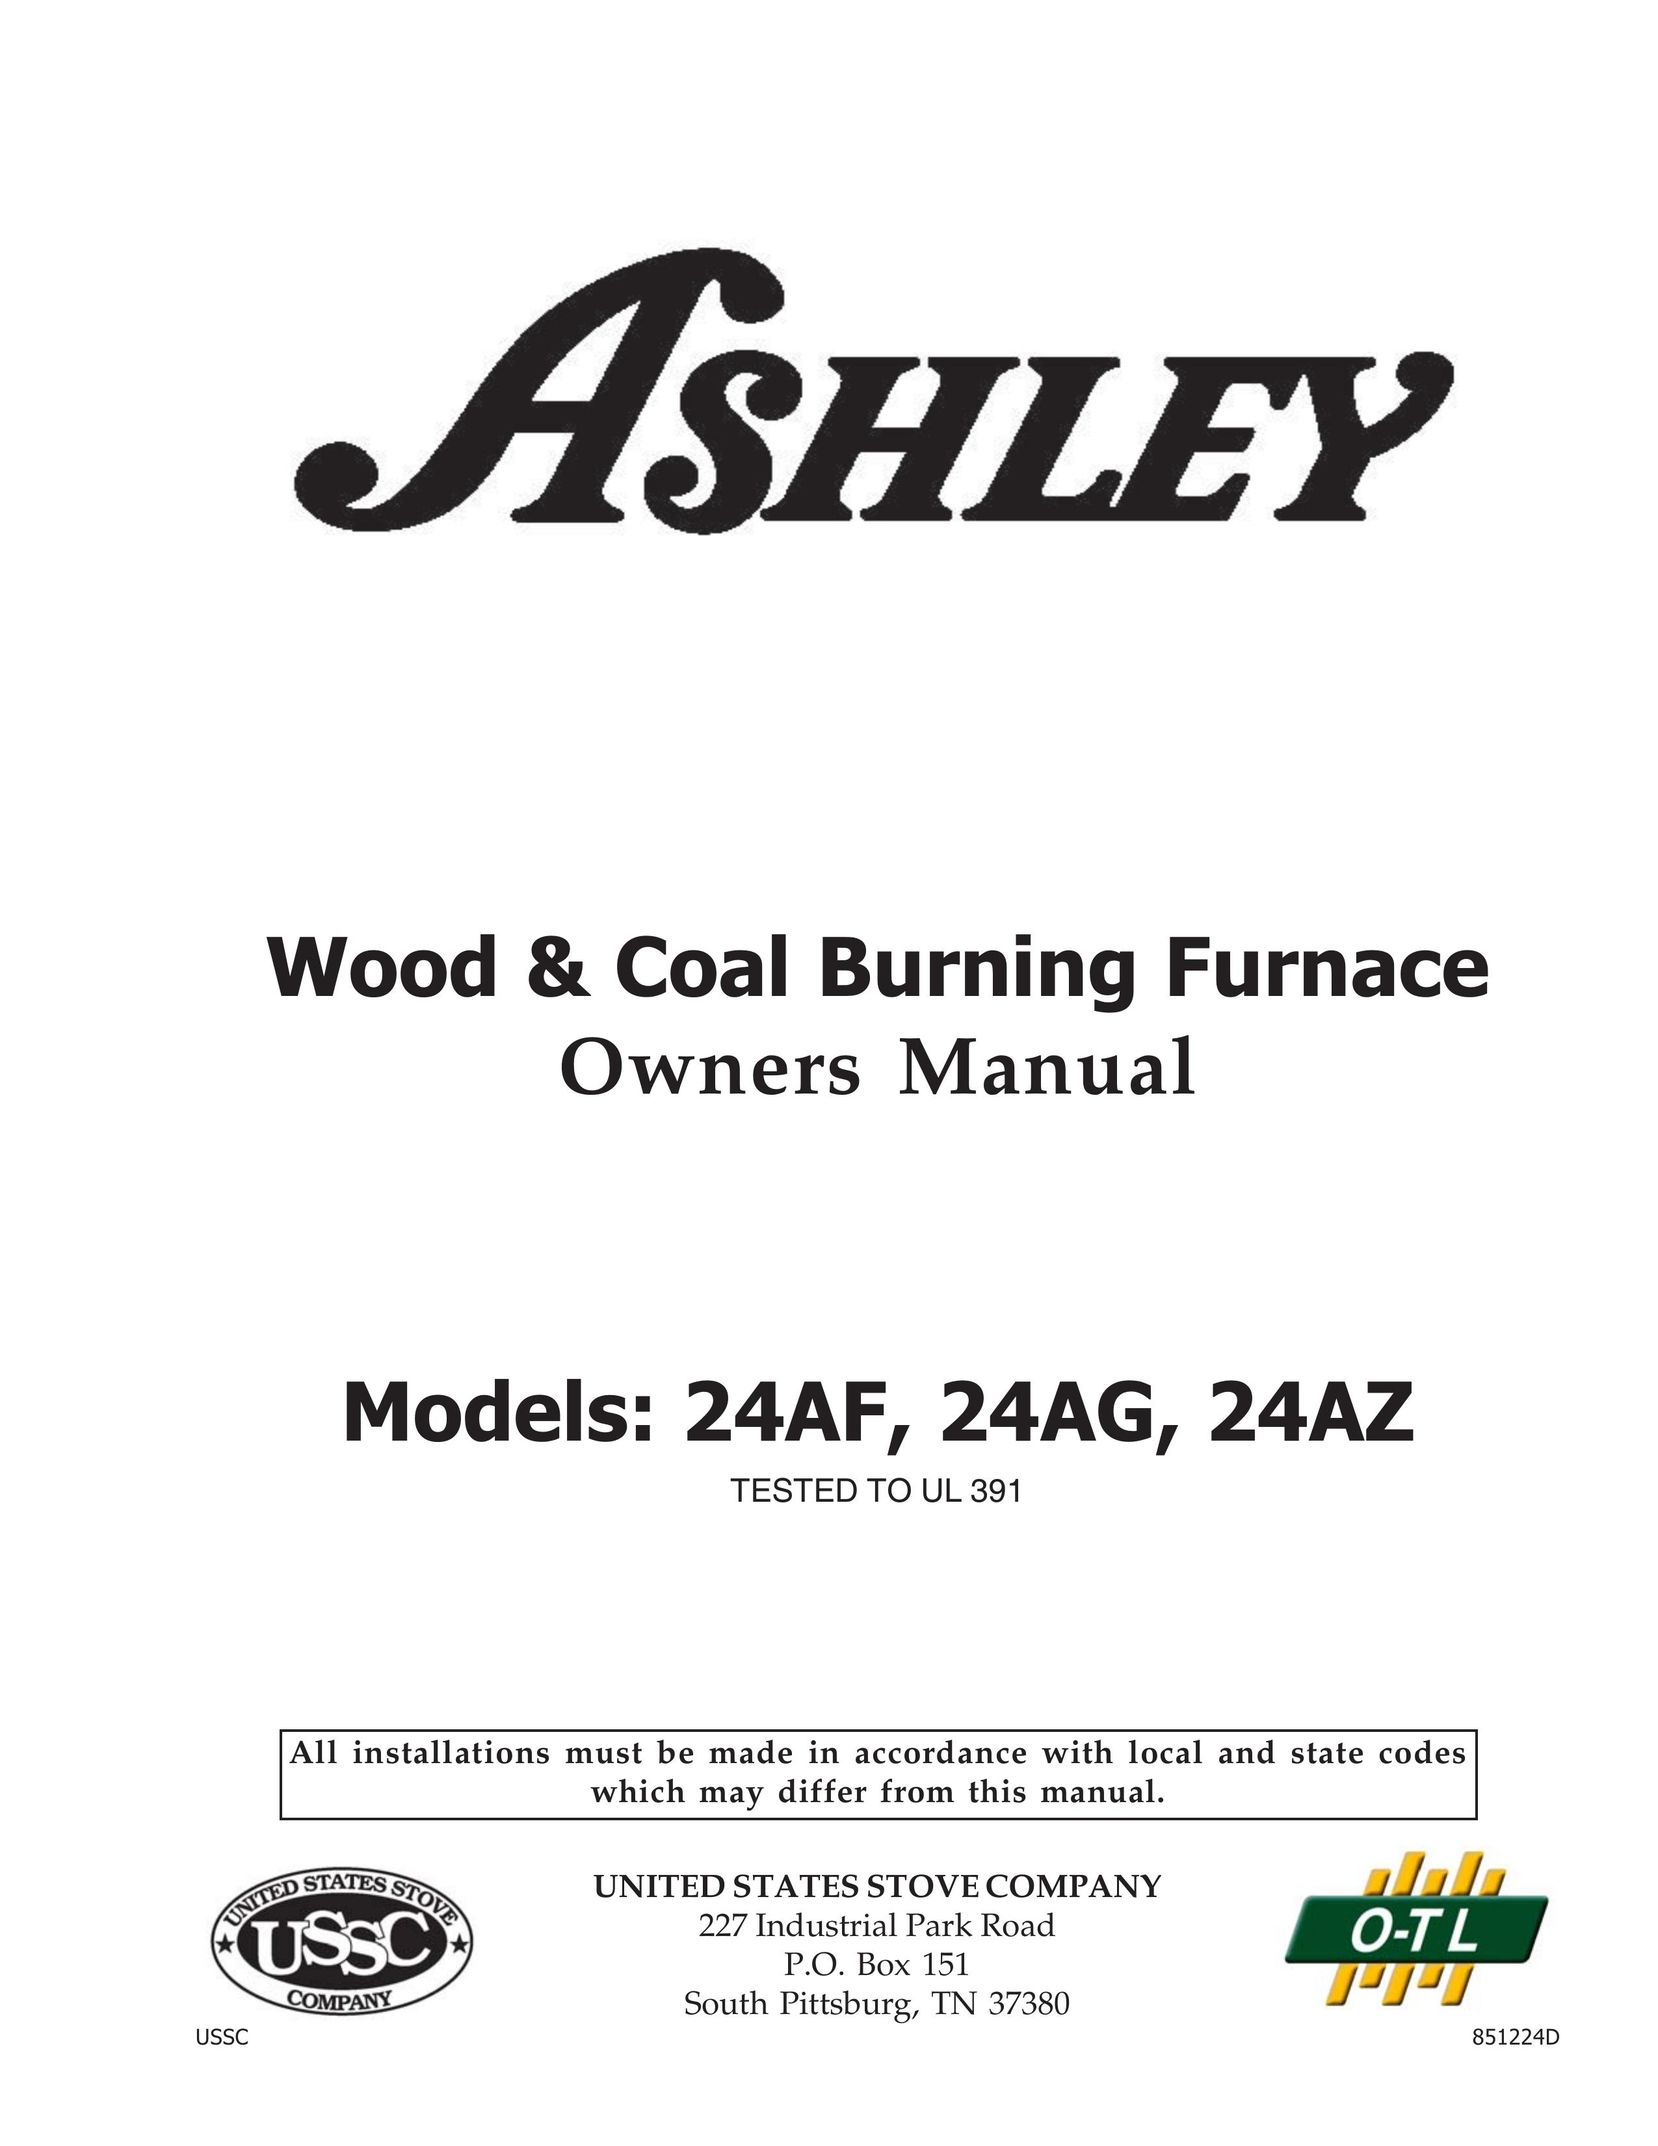 United States Stove 24AZ Furnace User Manual